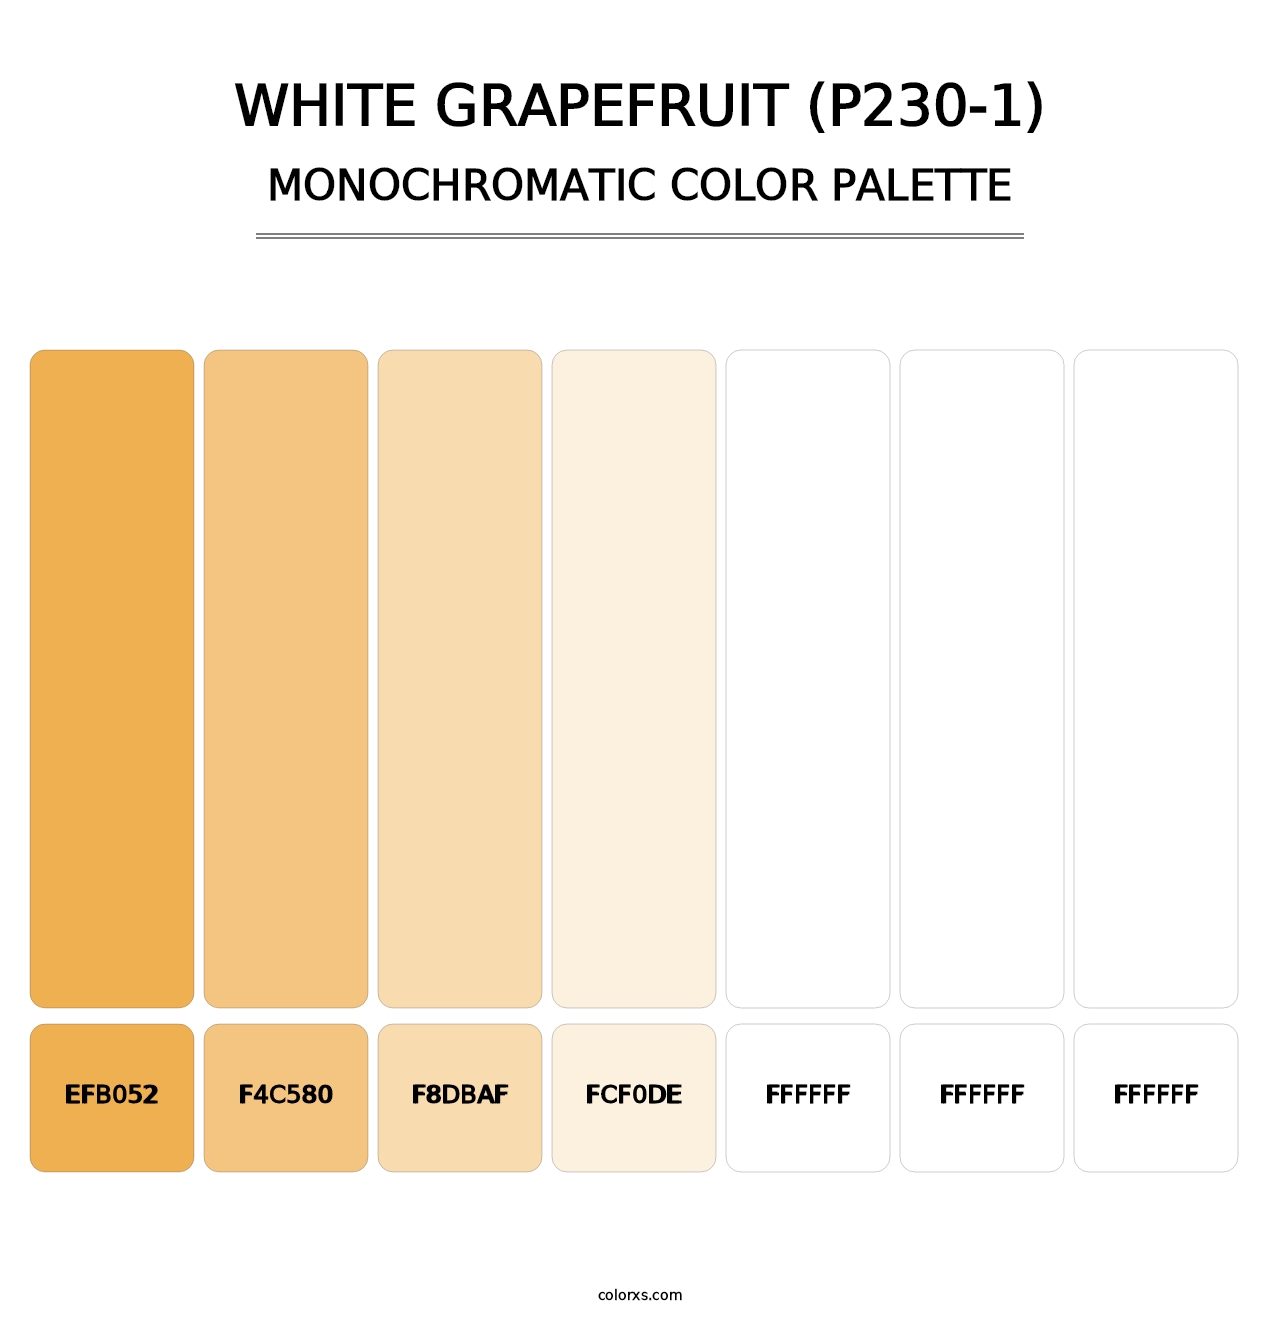 White Grapefruit (P230-1) - Monochromatic Color Palette